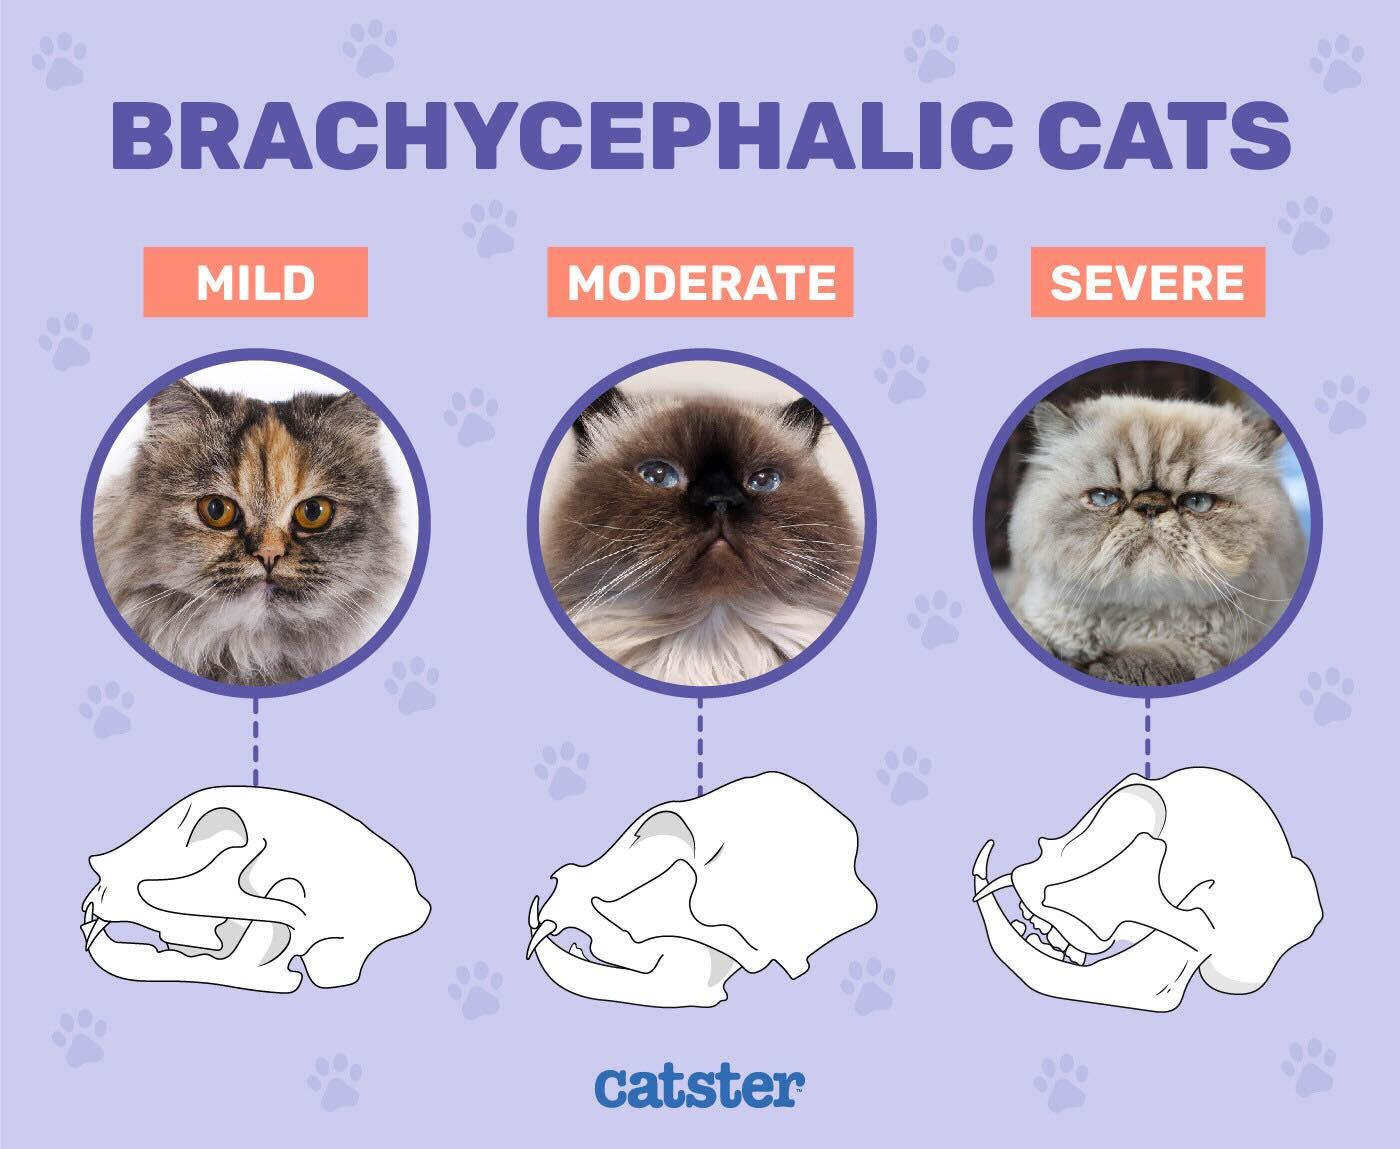 Brachycephalic cats